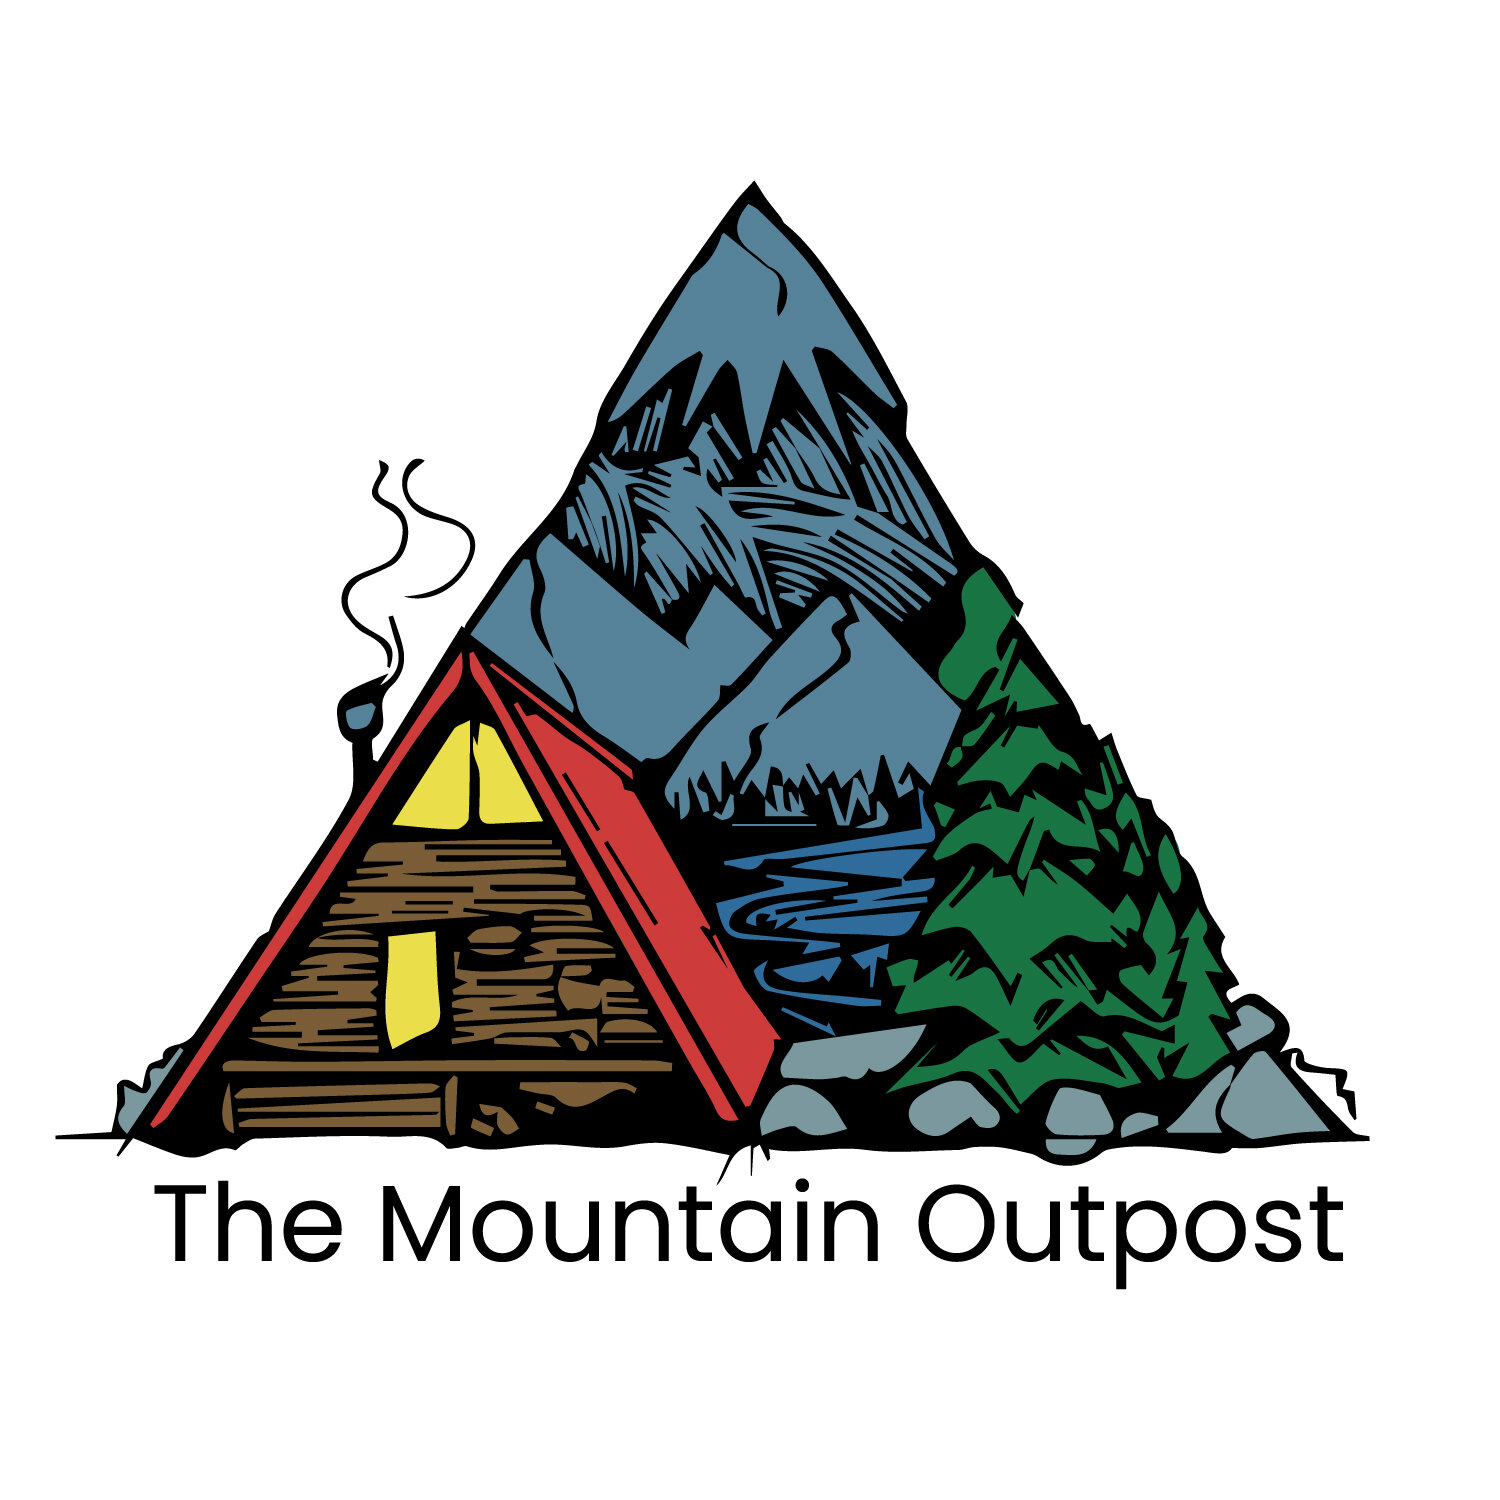 The Mountain Outpost